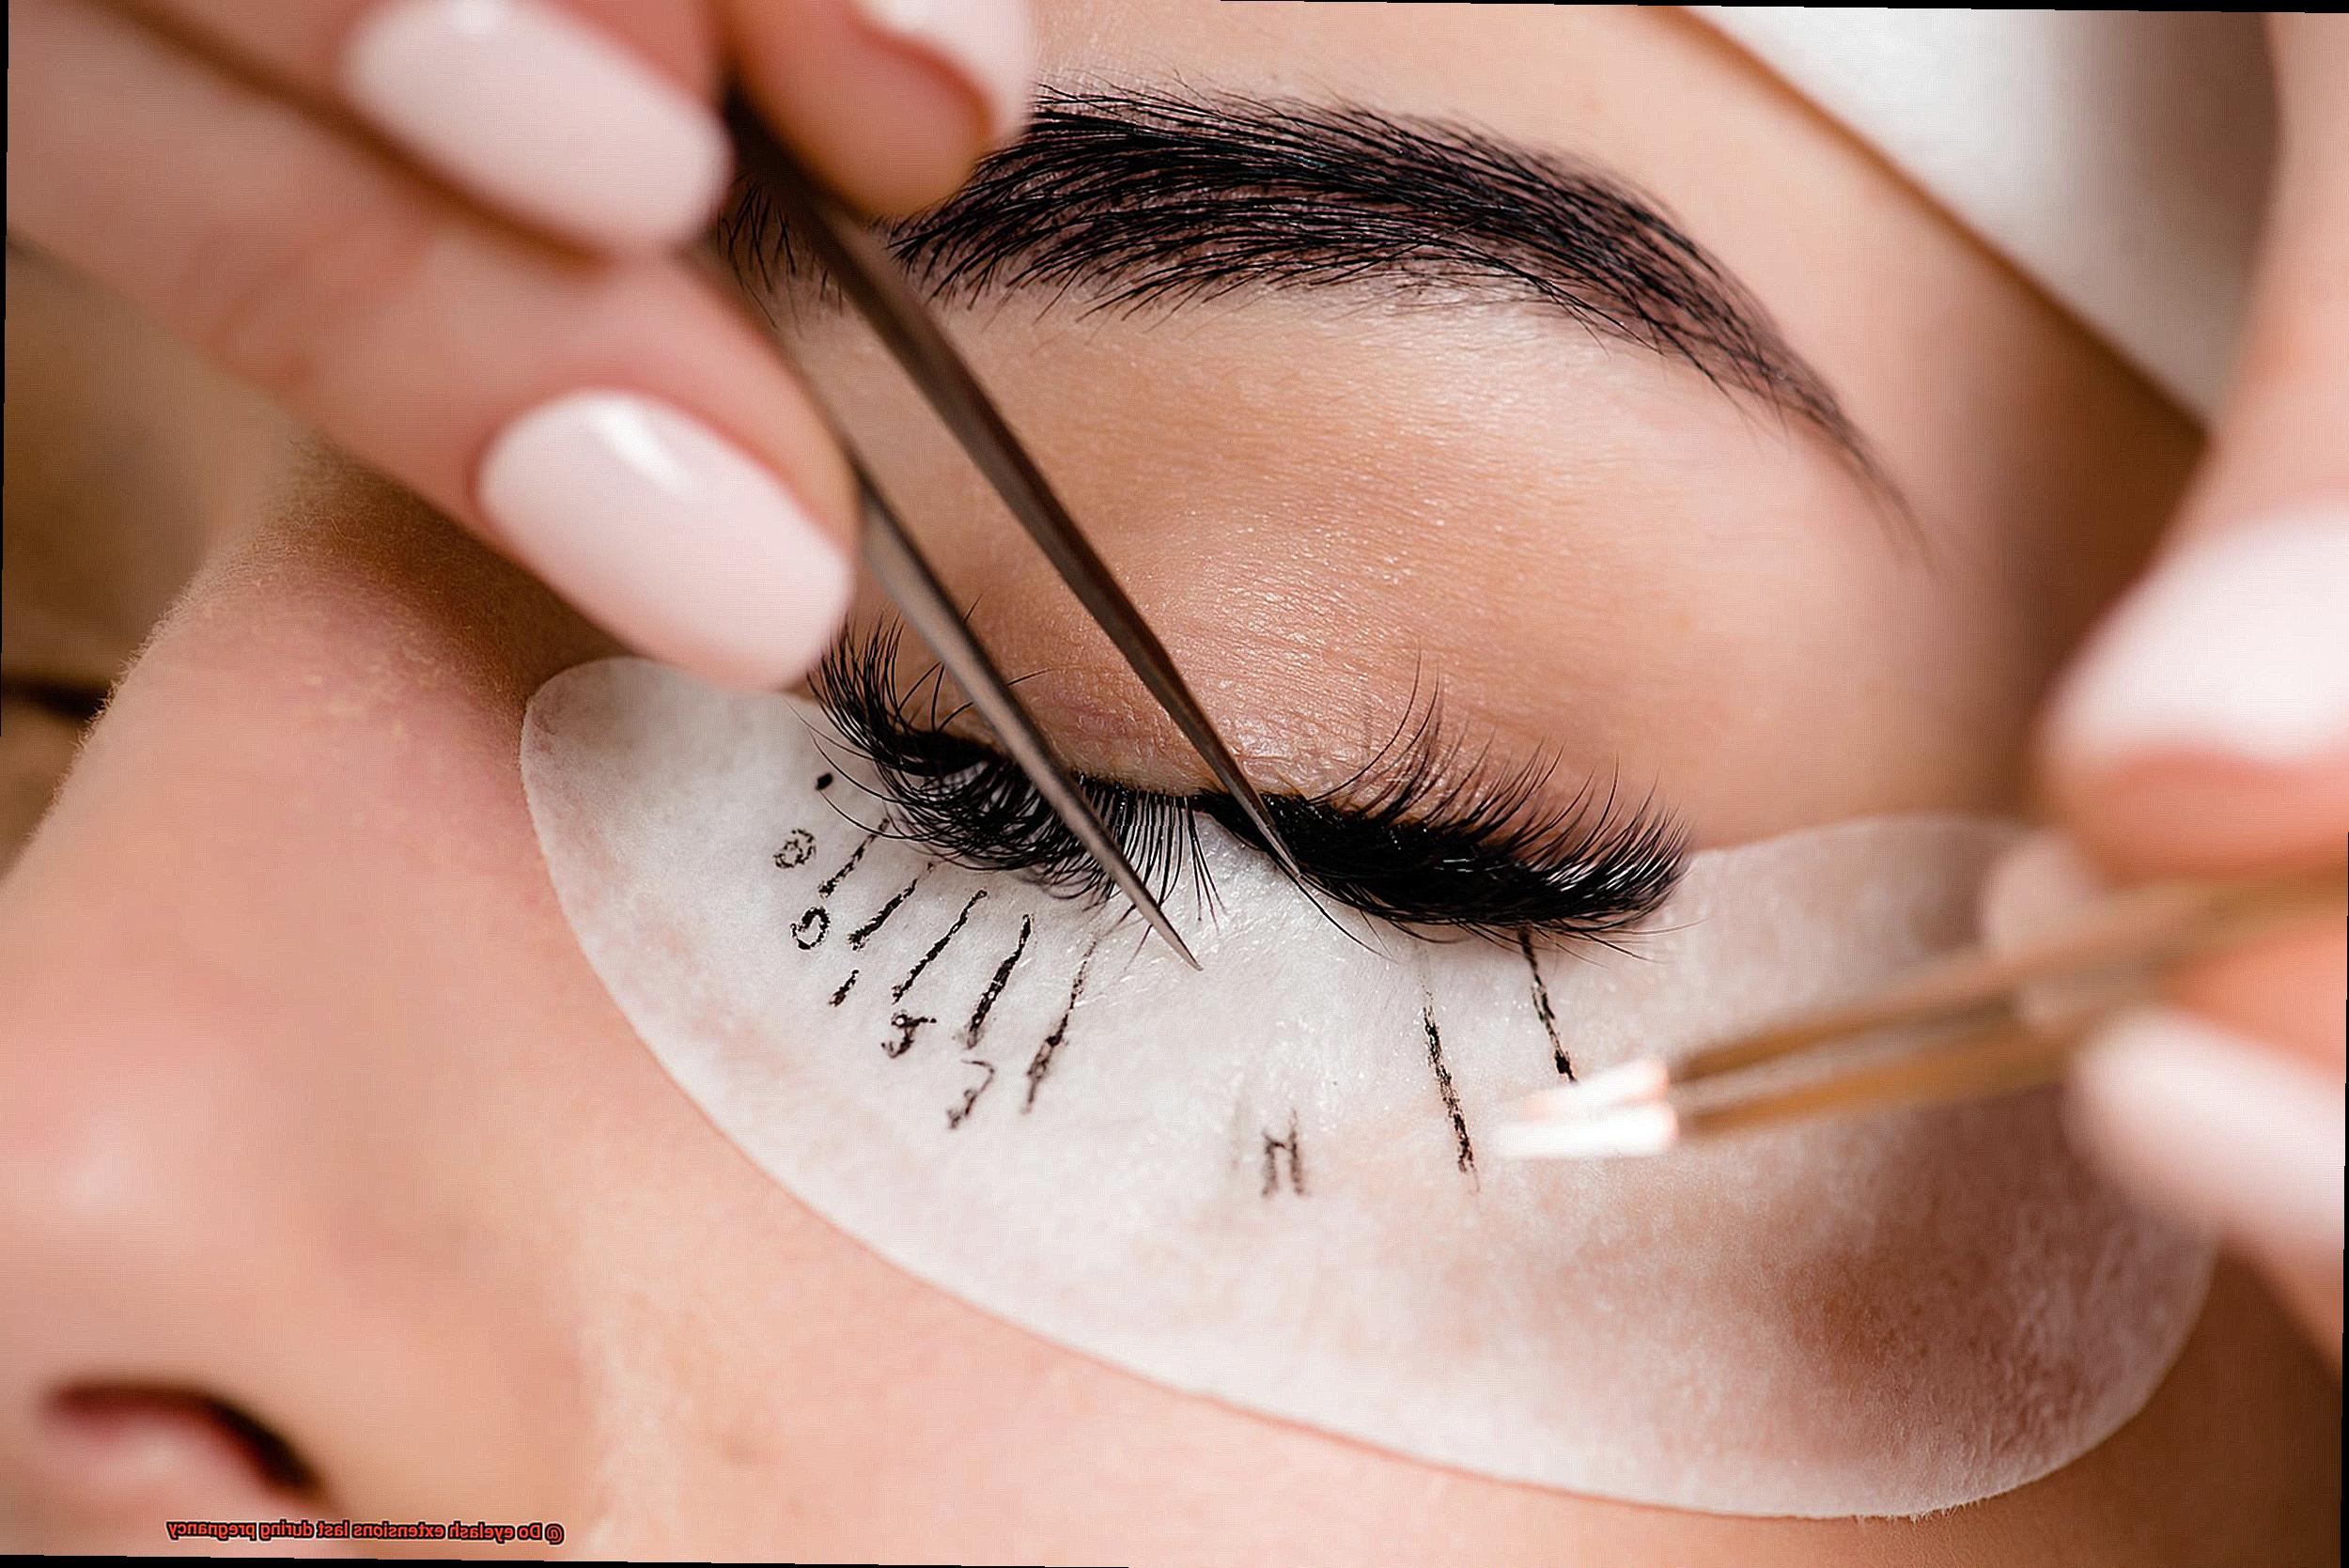 Do eyelash extensions last during pregnancy-5